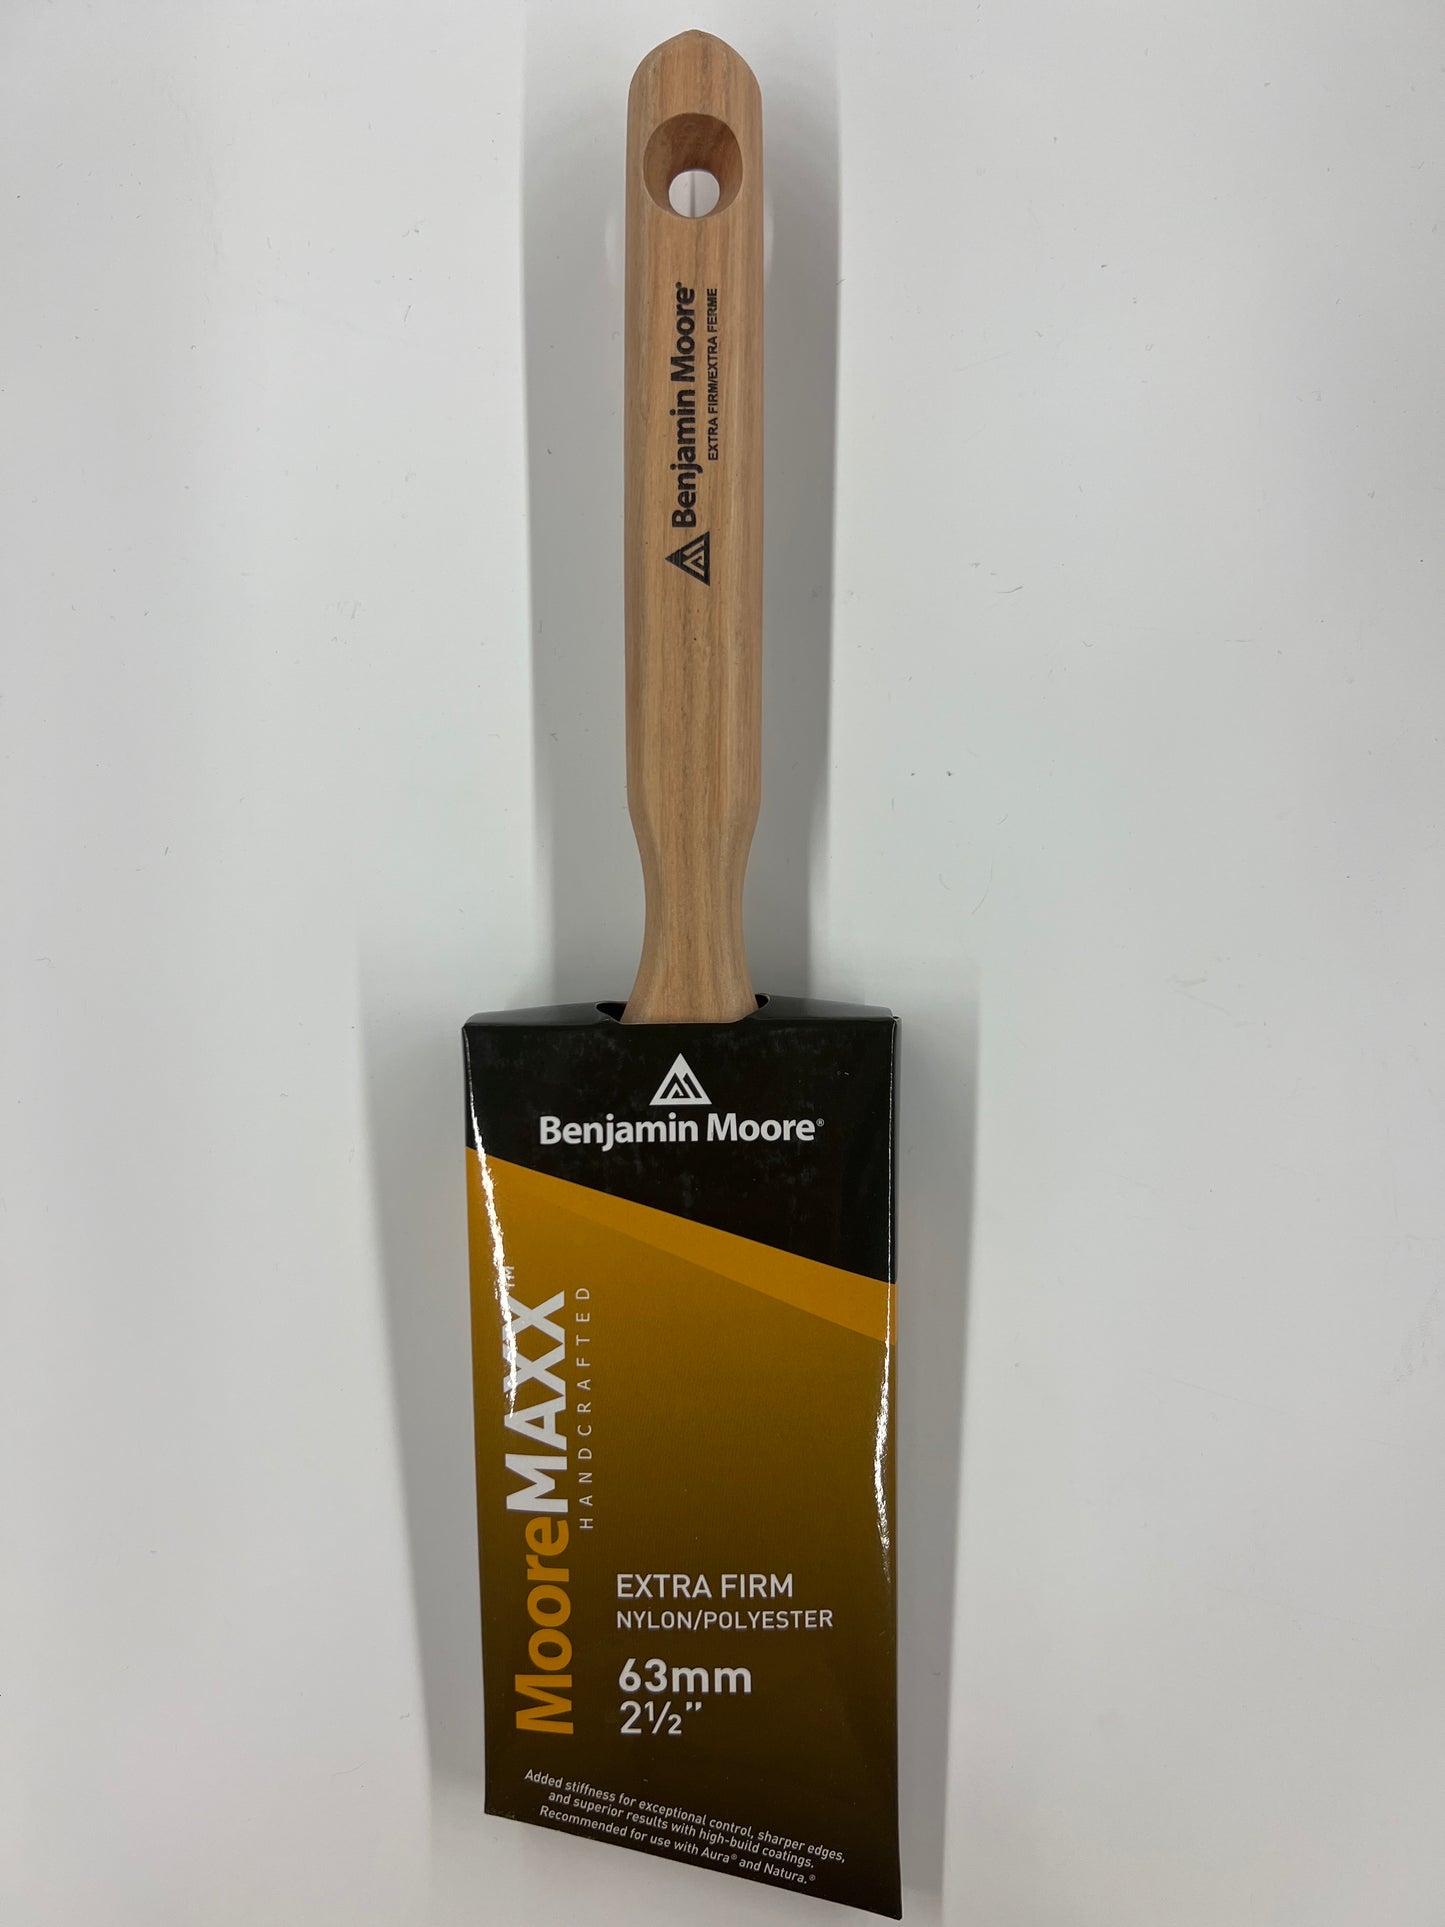 MooreMAXX 2 ½" Extra Firm Angle Brush